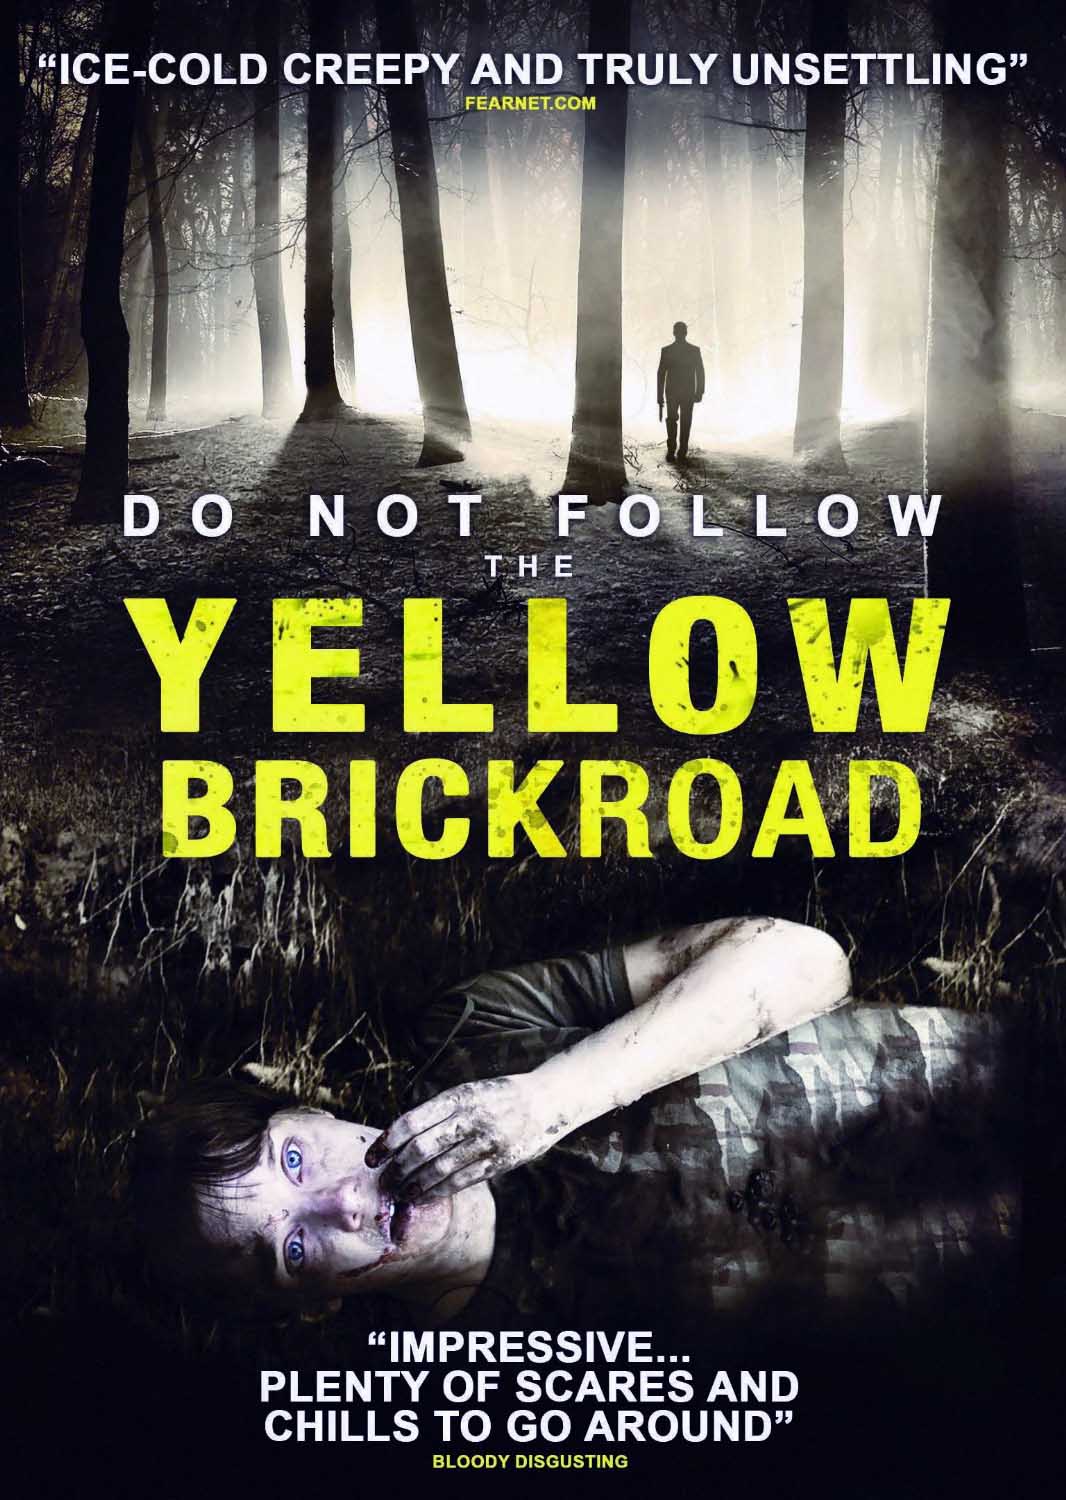 Yellowbrickroad (2010)